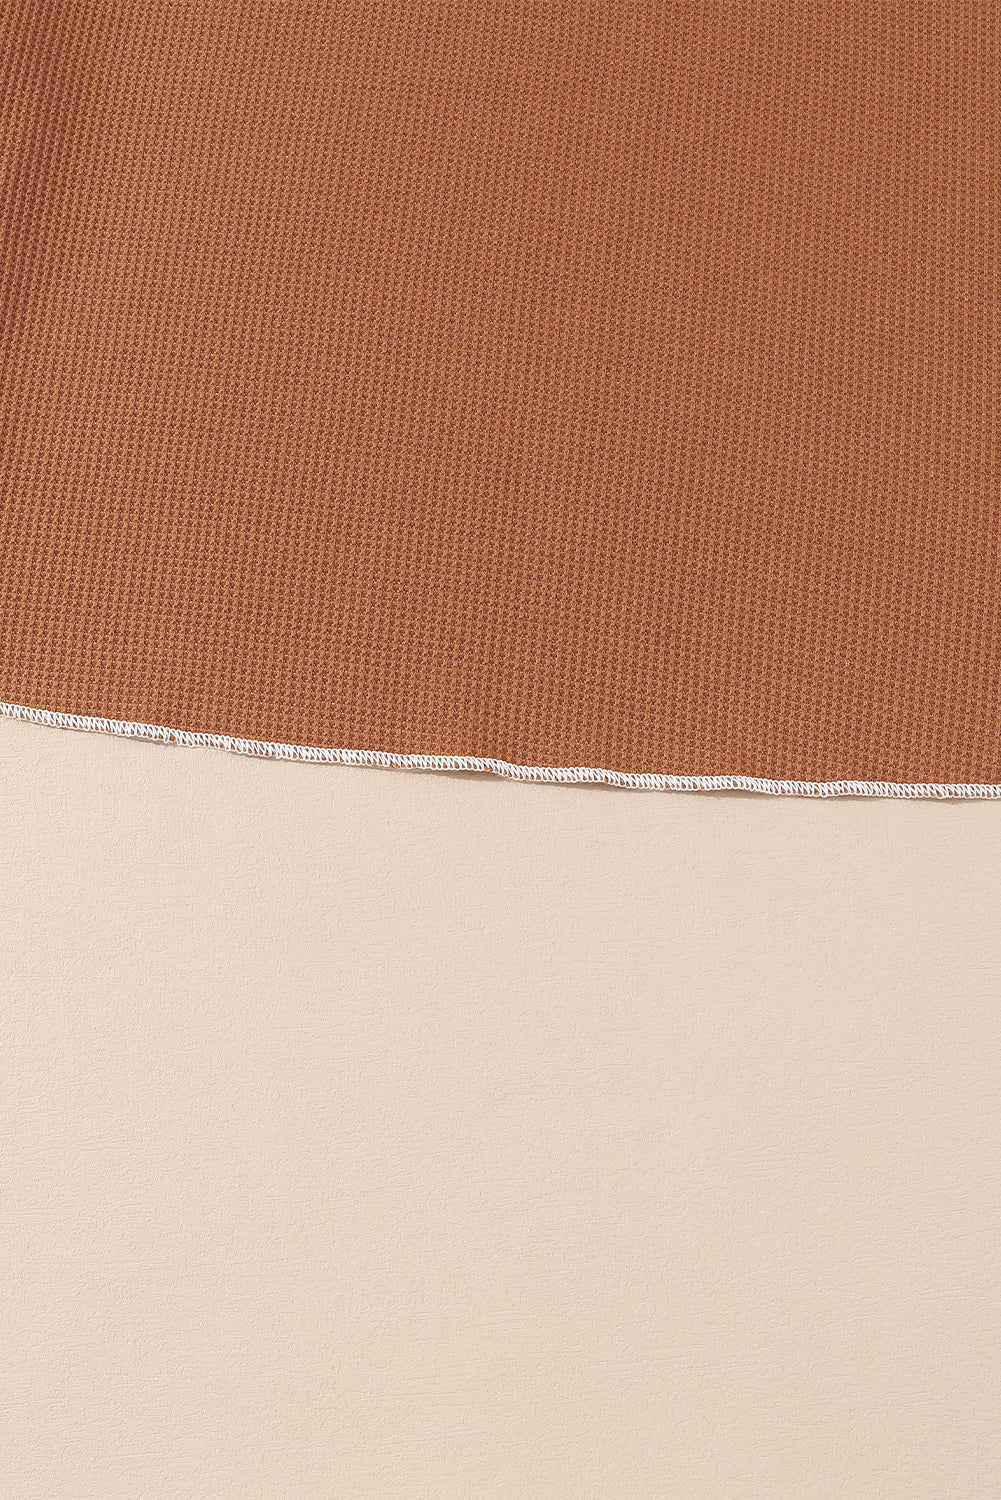 Chestnut Exposed Seam Detail Plus Size Textured Top